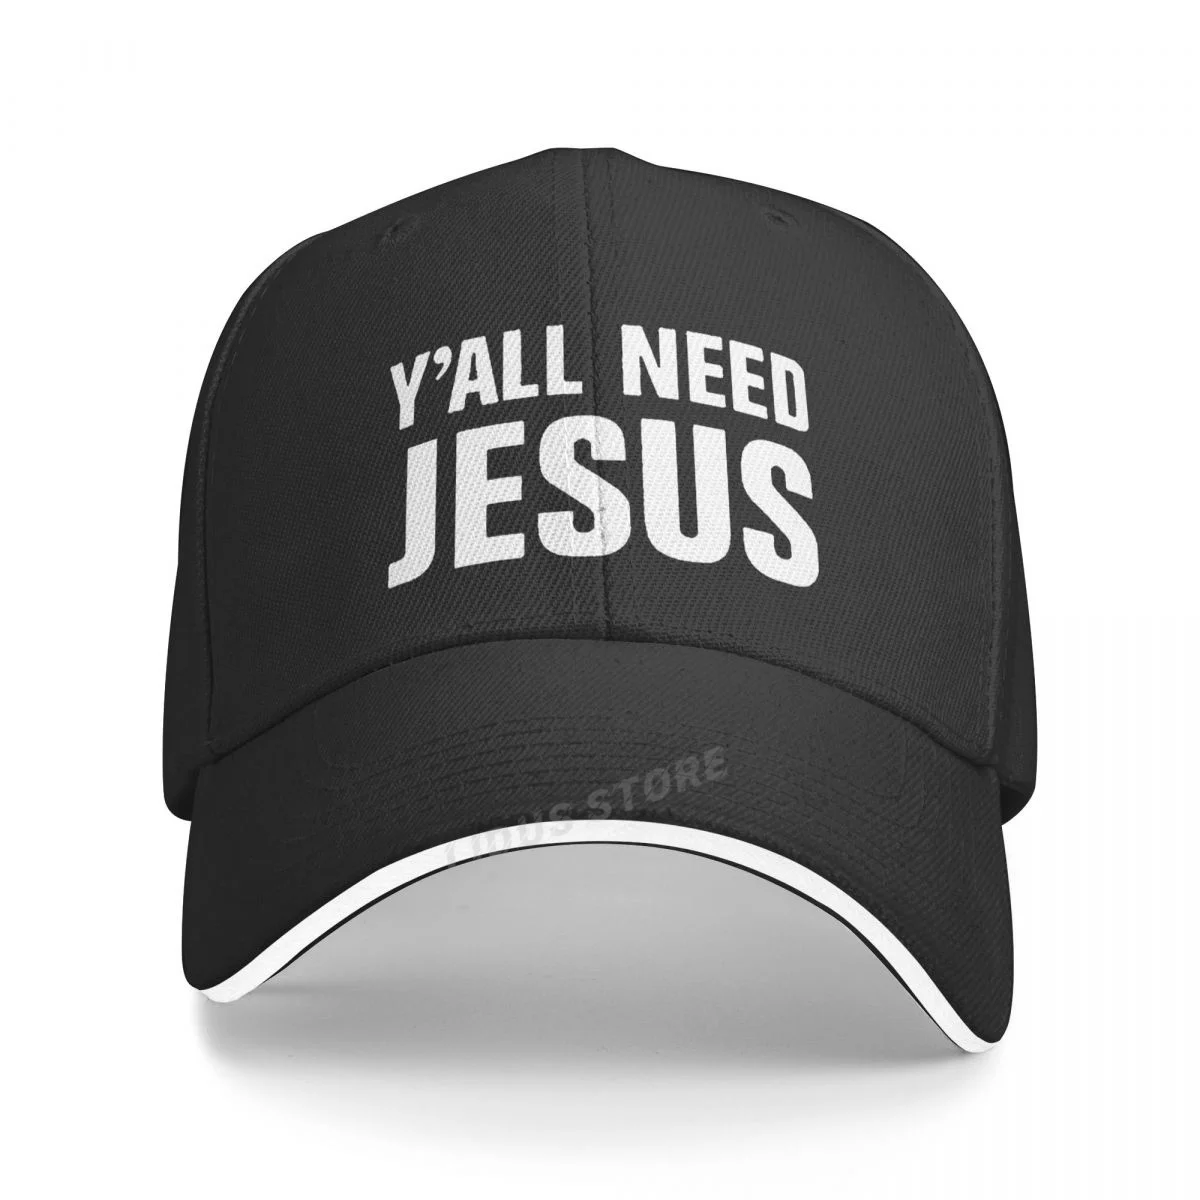 Y'all Need Jesus Letter Printed Baseball Cap Fashion Men Women Trucker Hat Casquette Snapback Gorras Boinas Hats